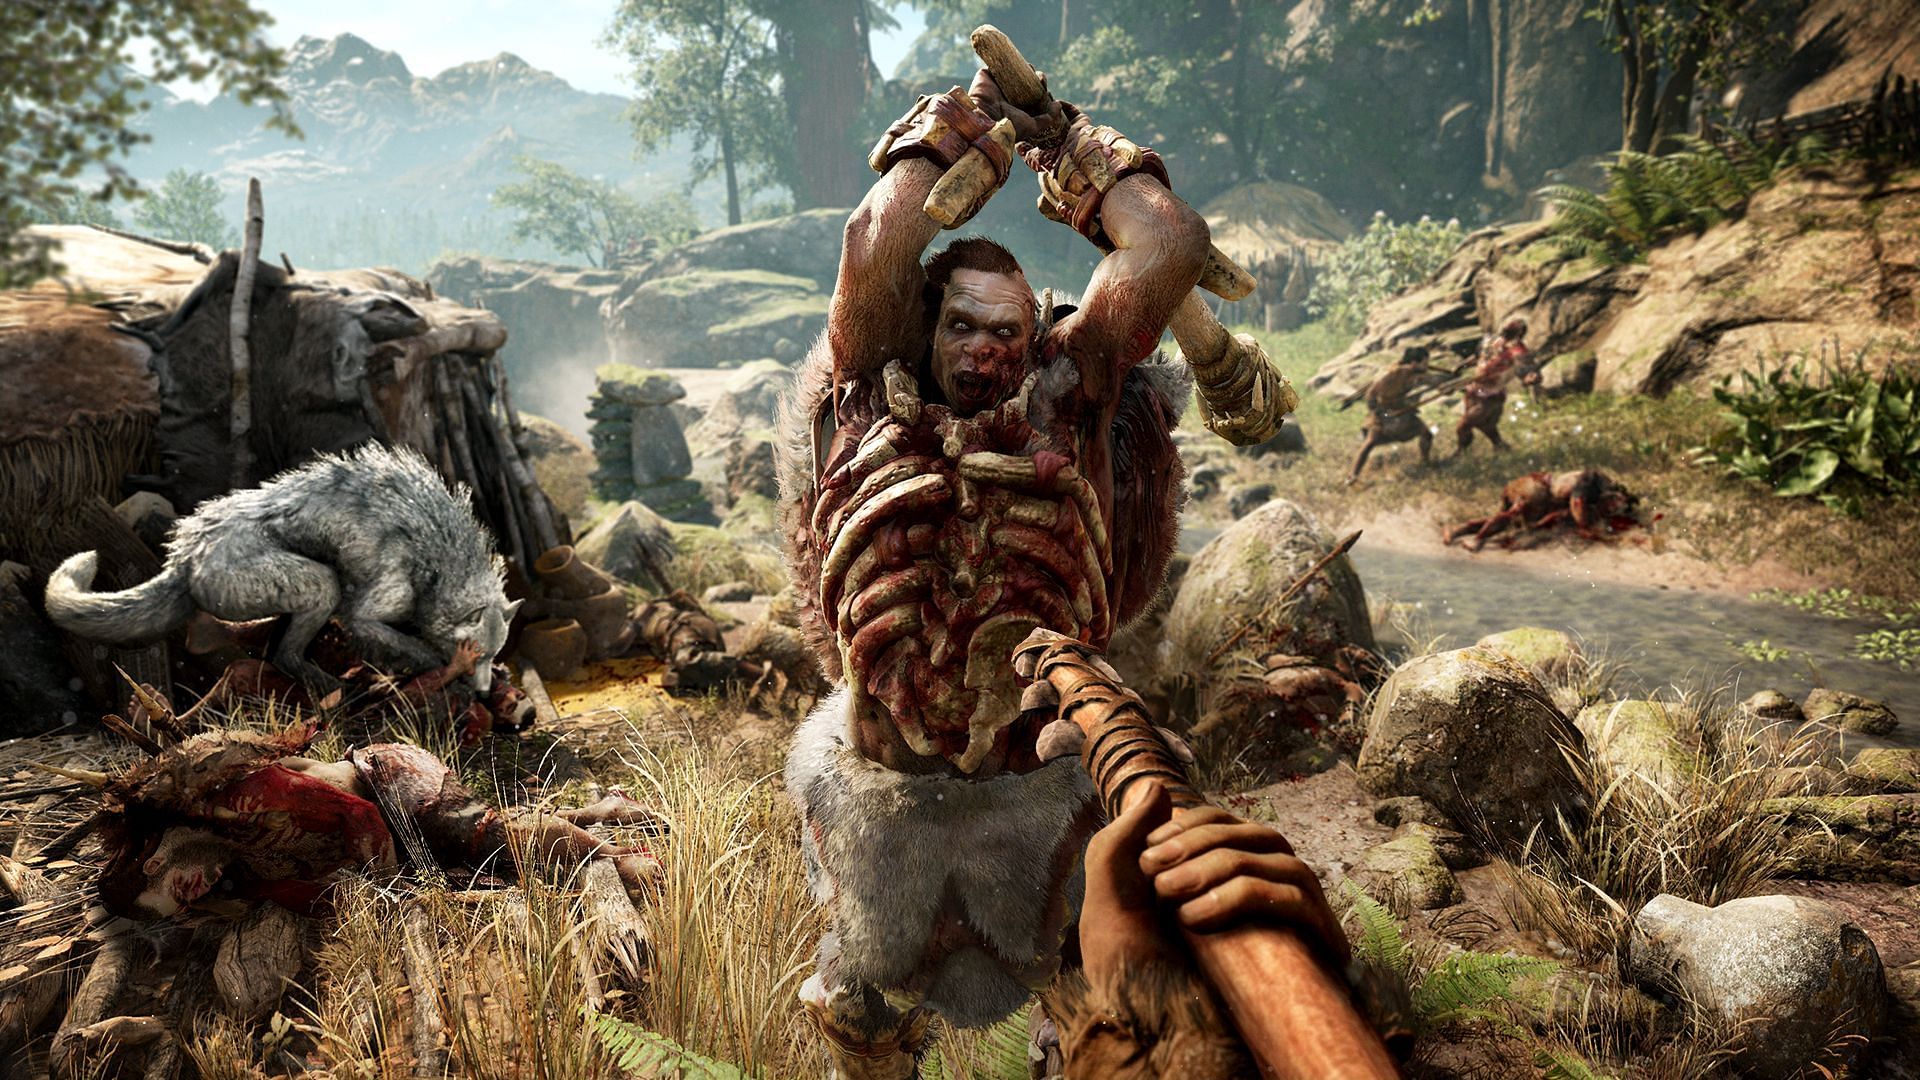 Far Cry Primal feature image (Image via Ubisoft)